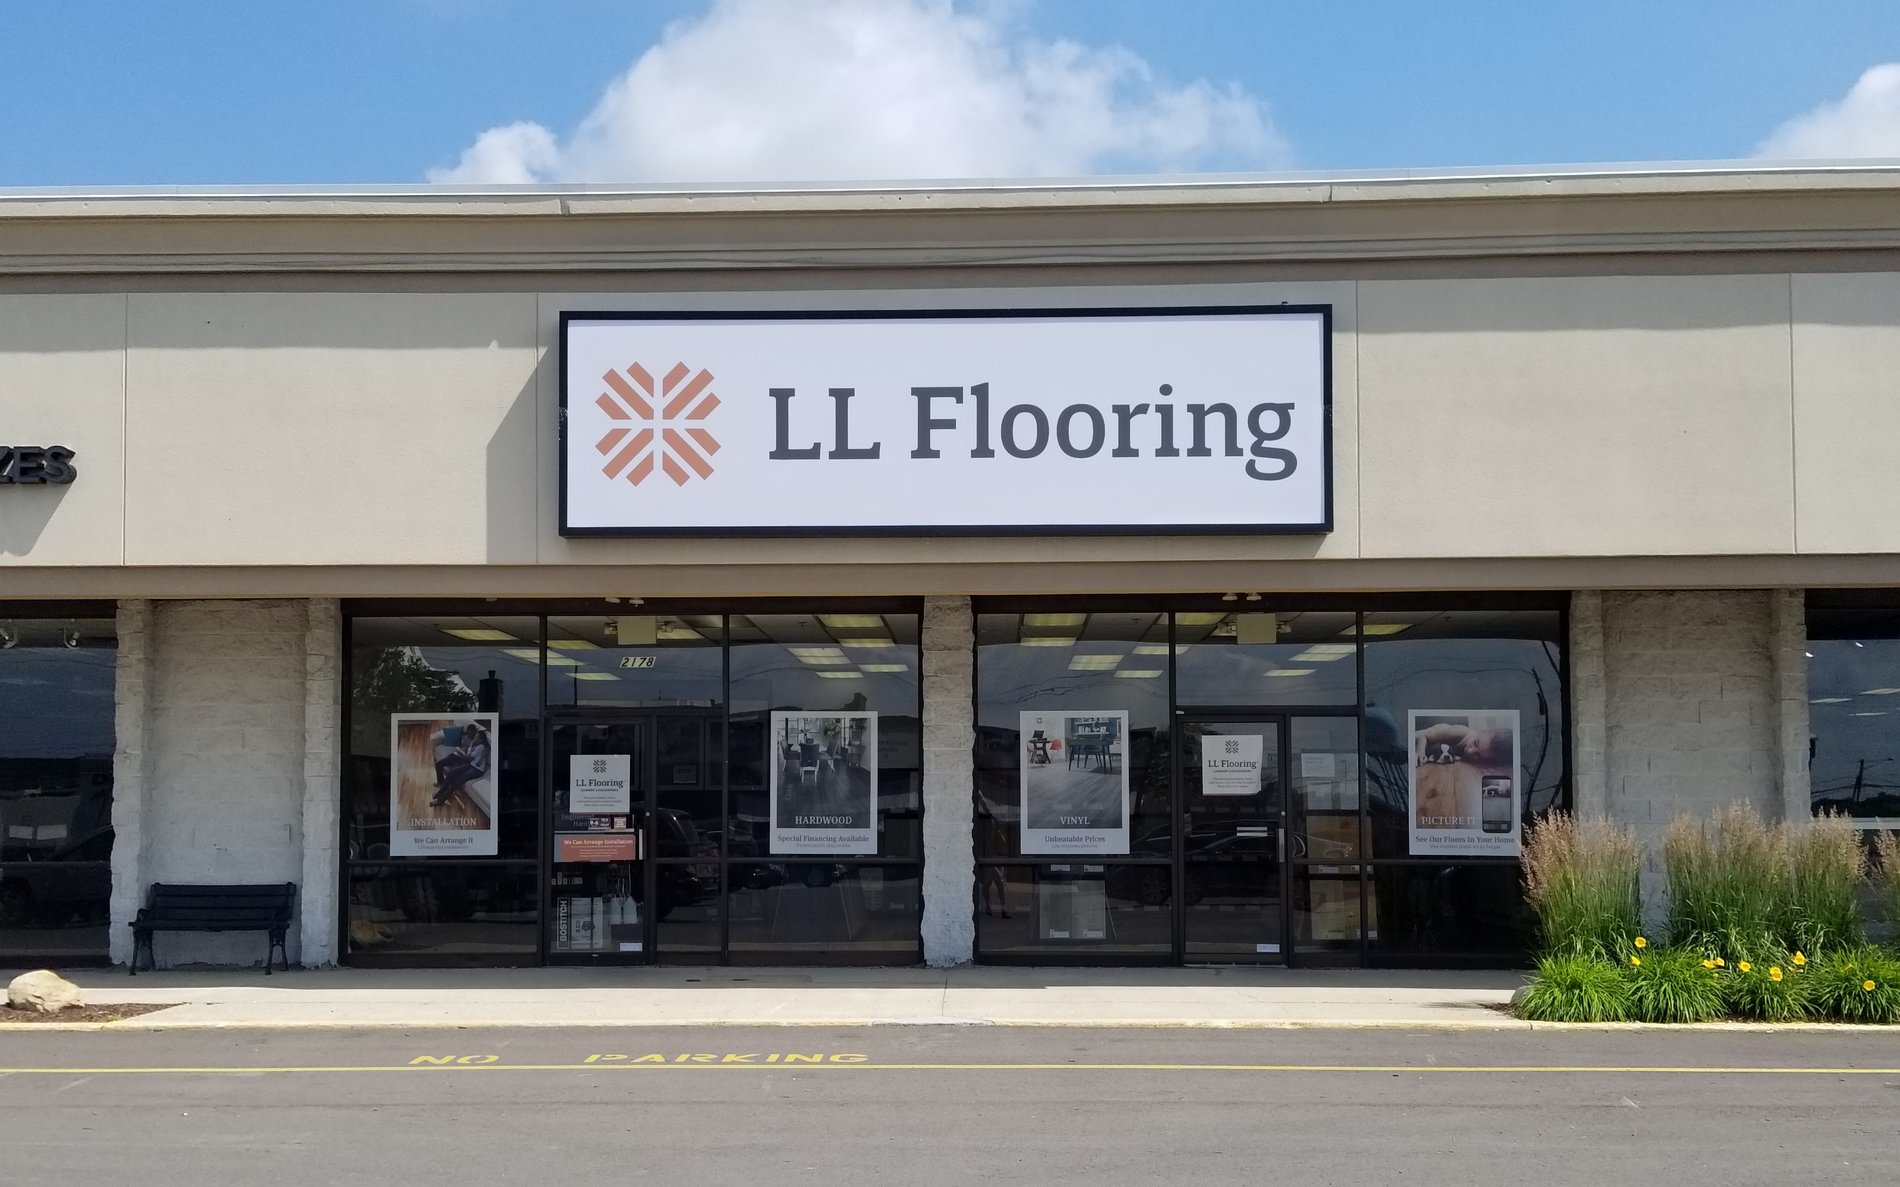 LL Flooring #1243 Ontario | 2178 West 4th Street | Storefront